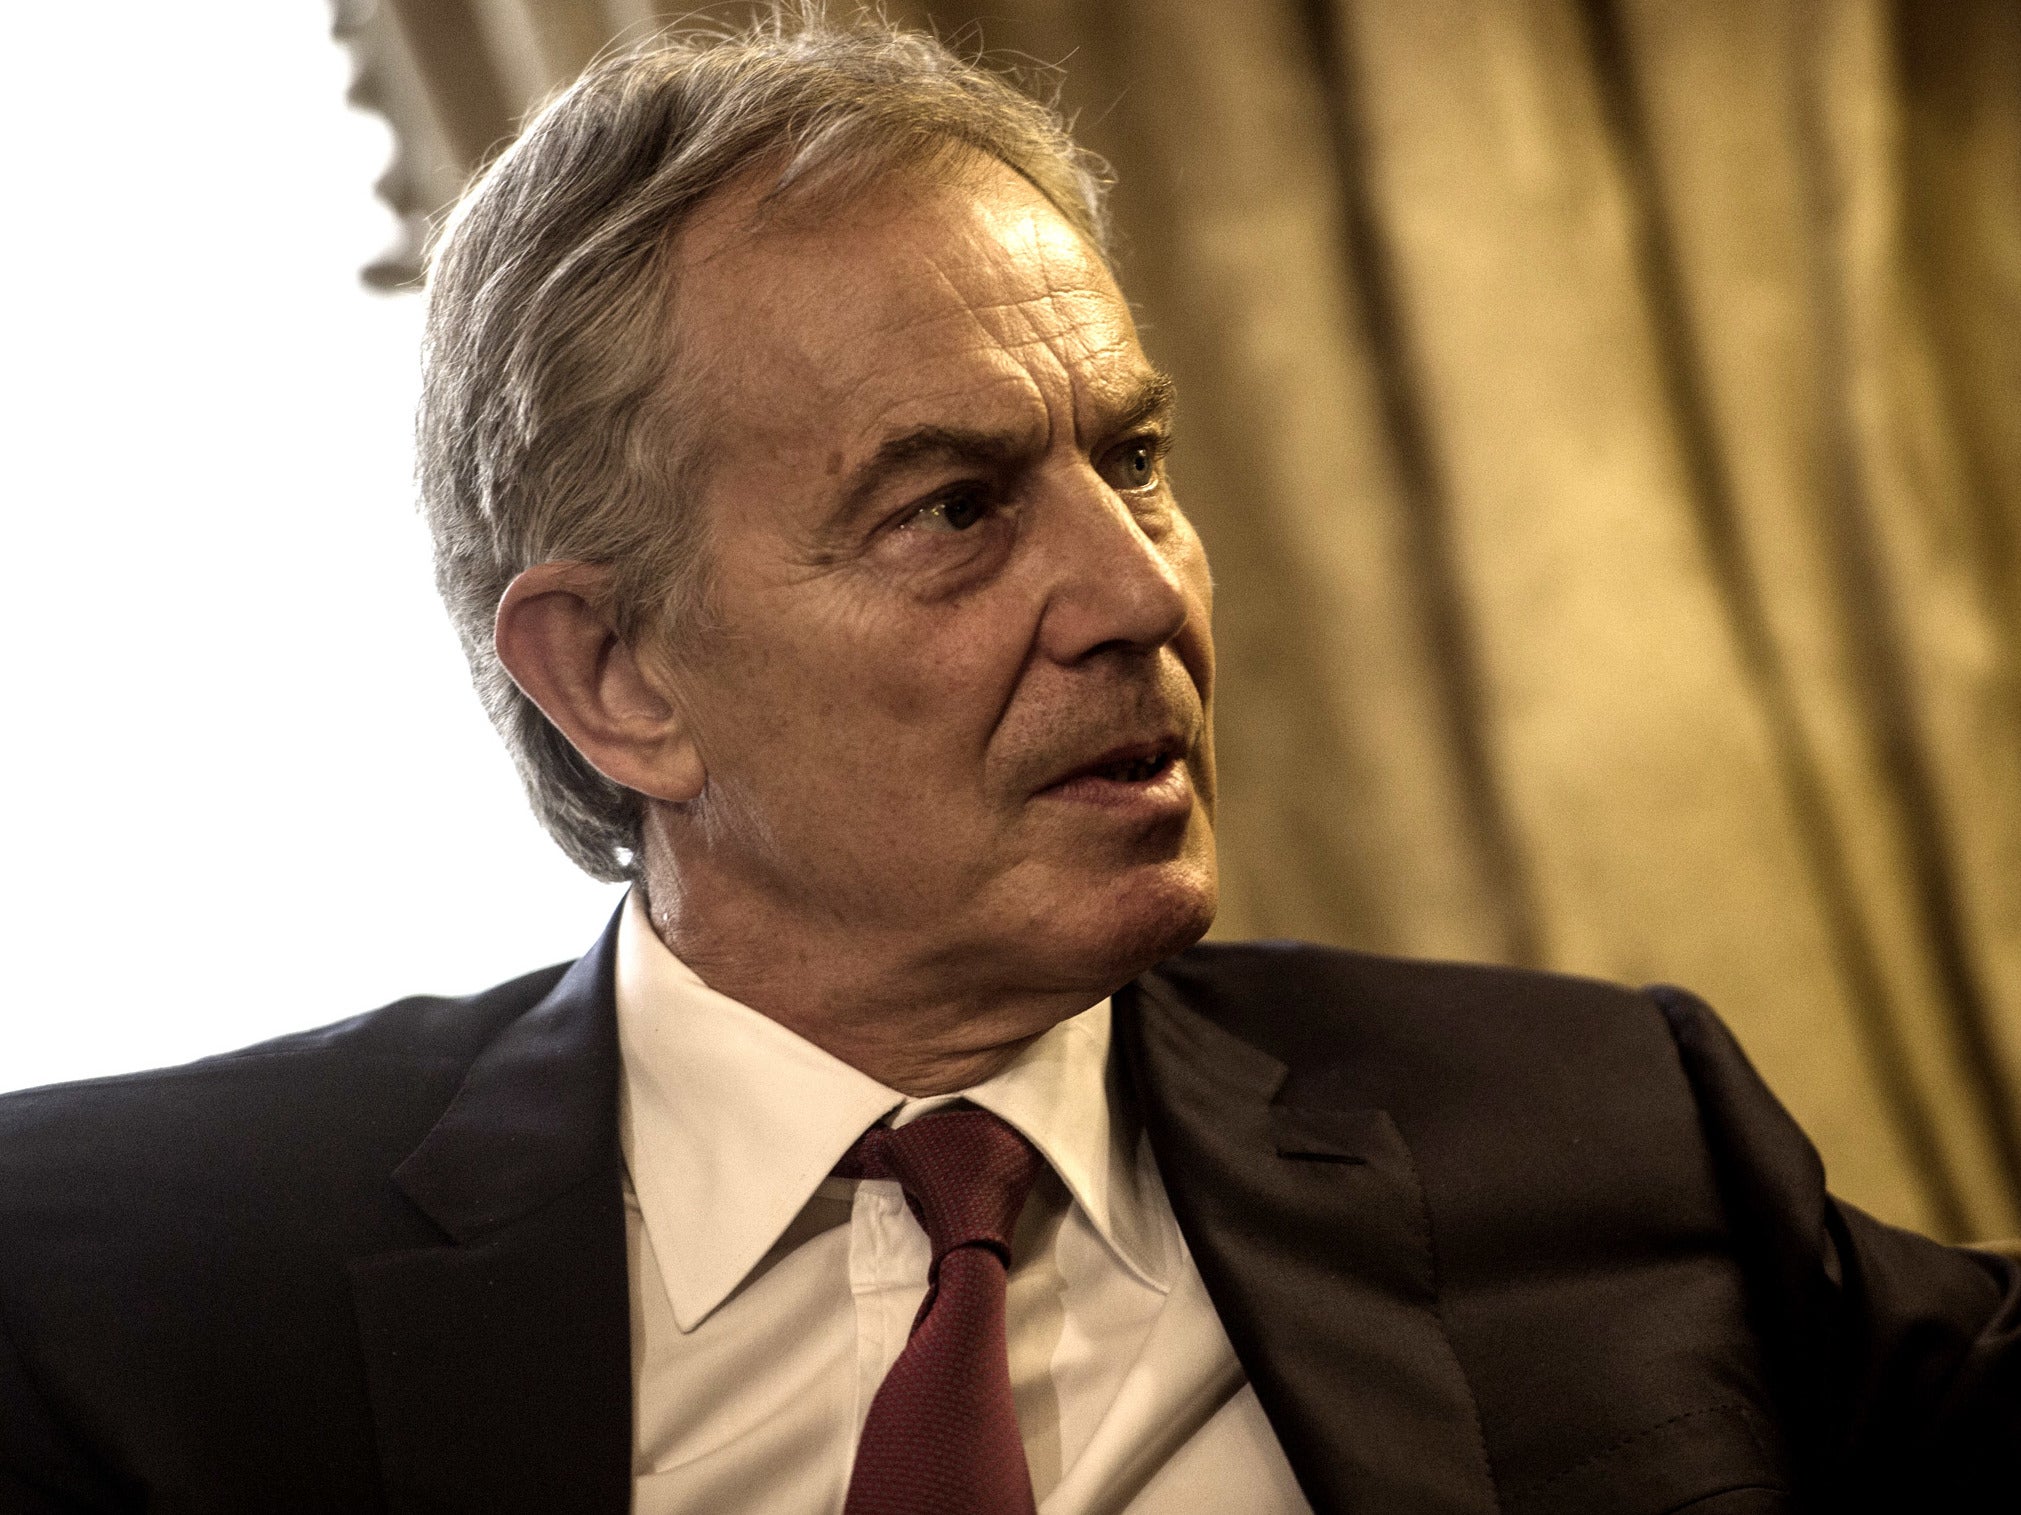 Tony Blair counts Mubarak, Berlusconi and Gaddaffi as his friends - is he cursed?